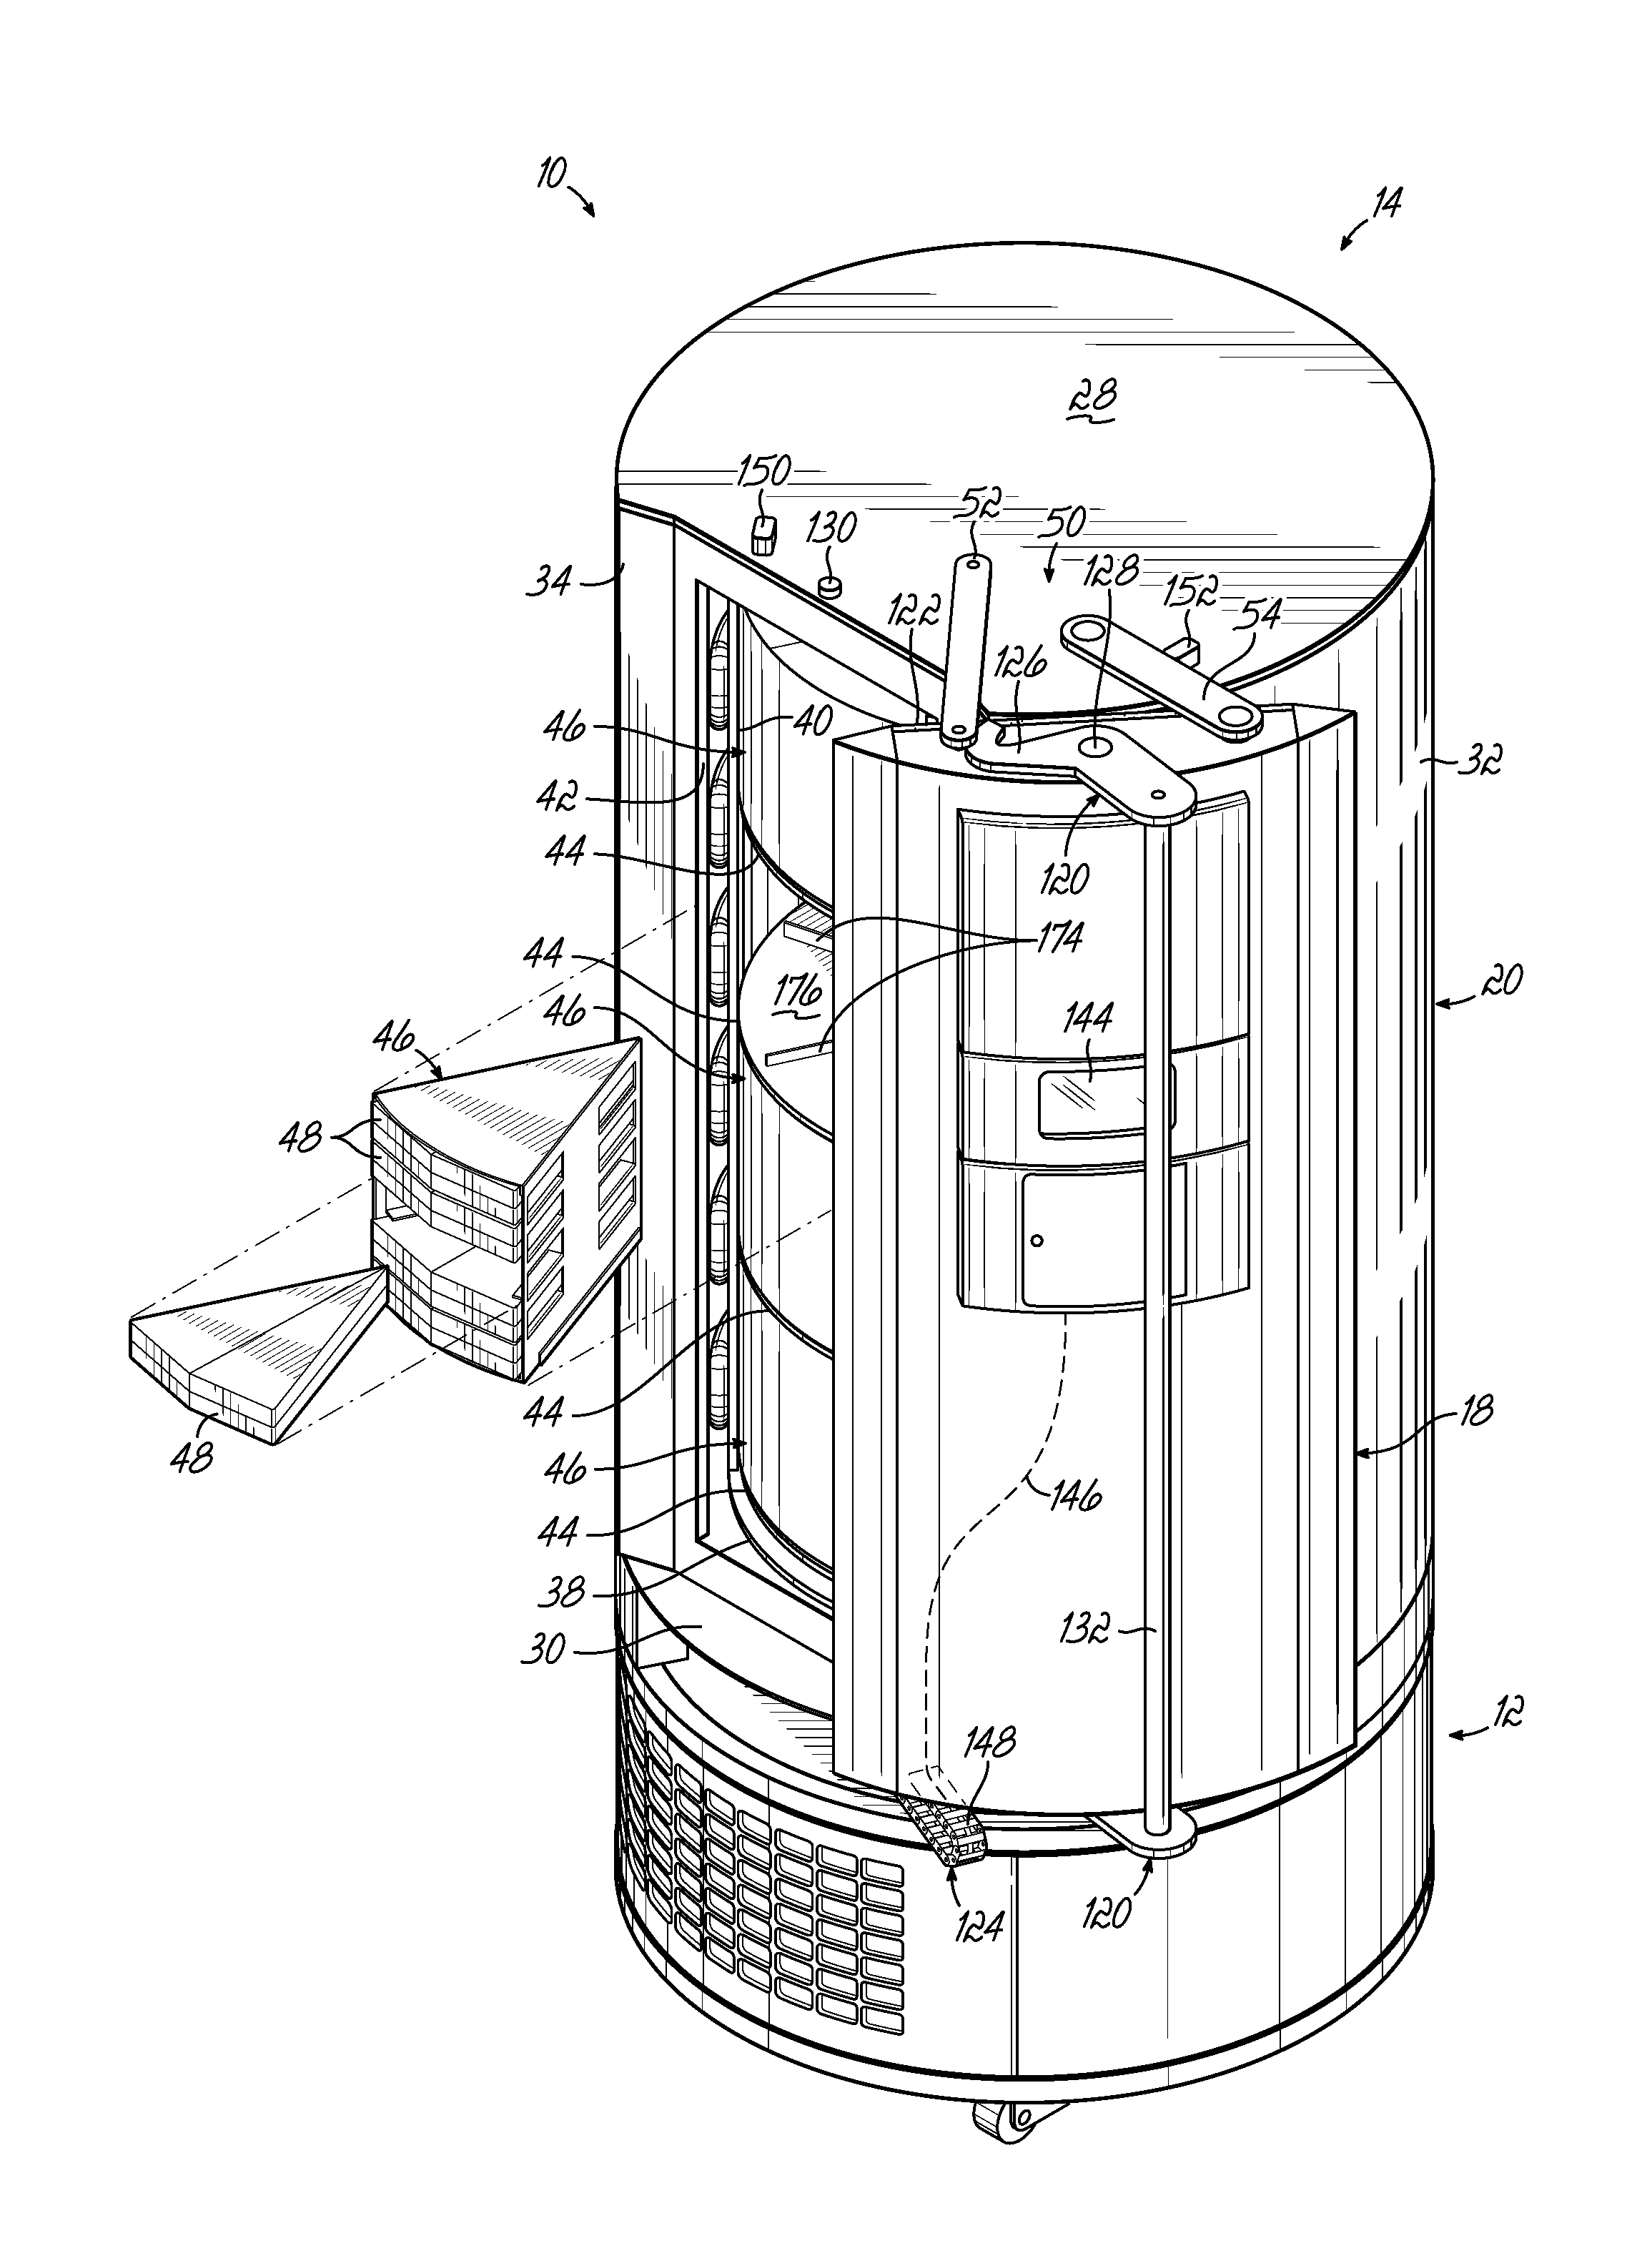 High performance freezer having cylindrical cabinet